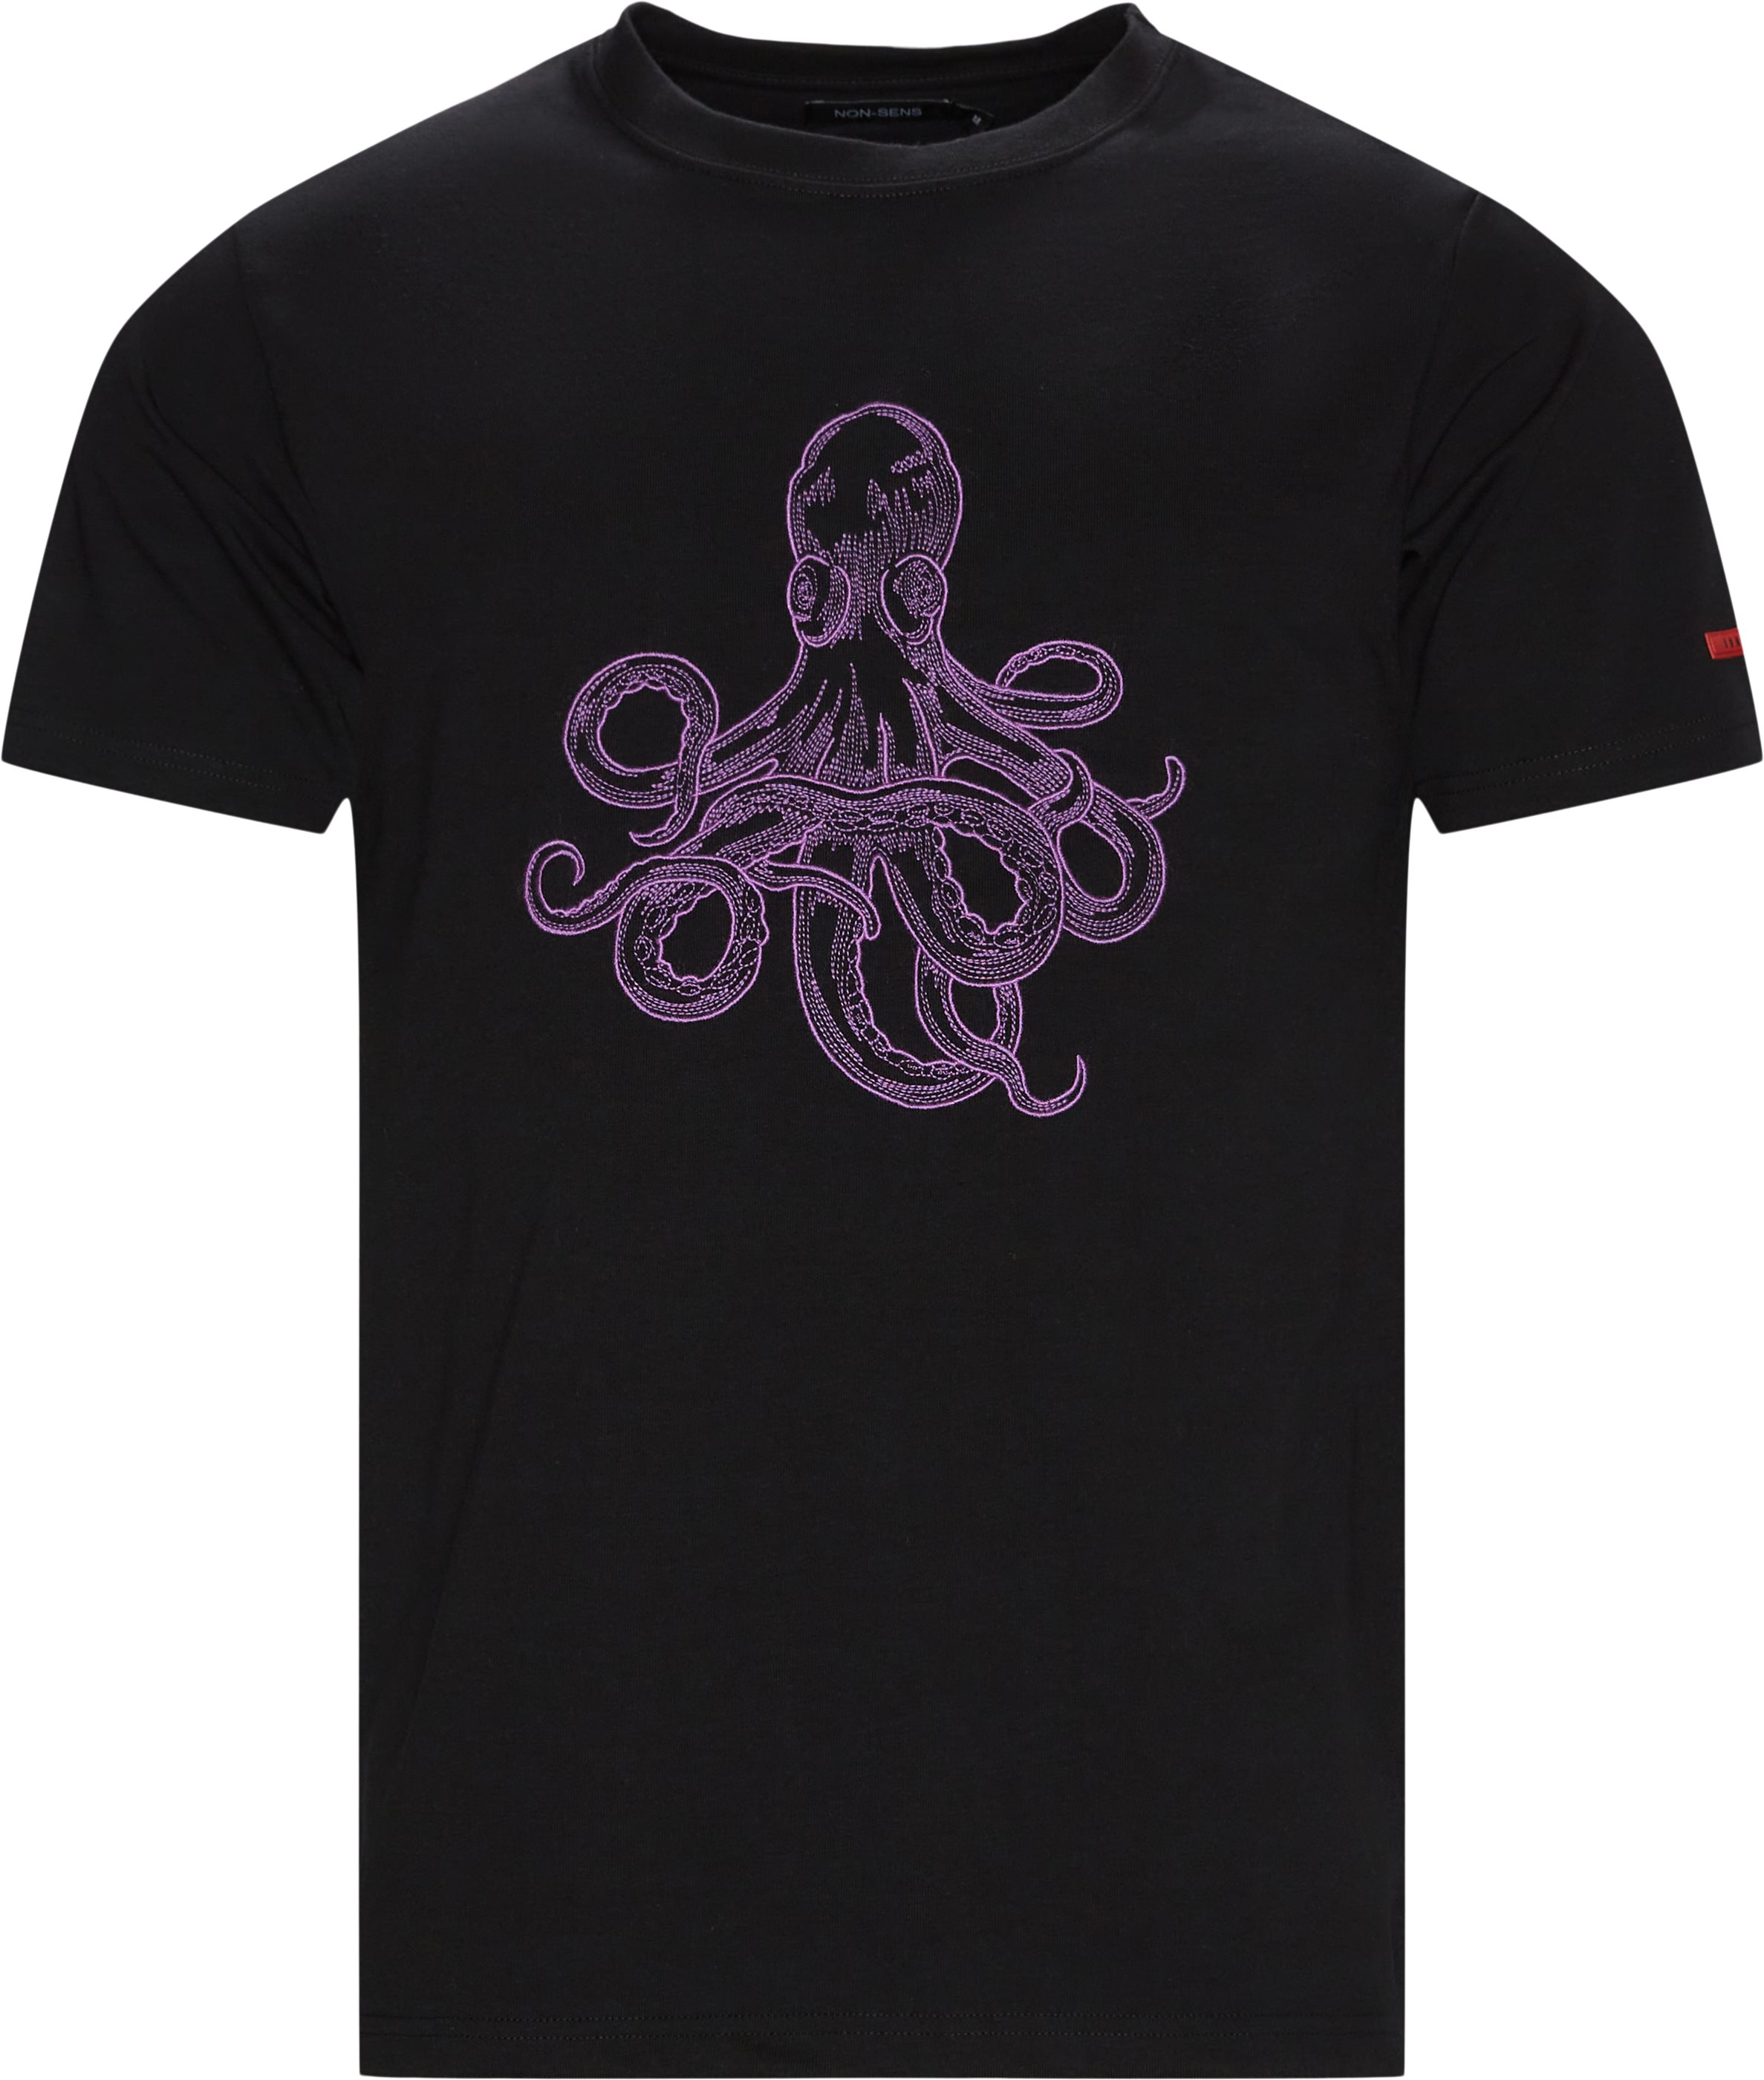 Octopus Tee - T-shirts - Regular fit - Black